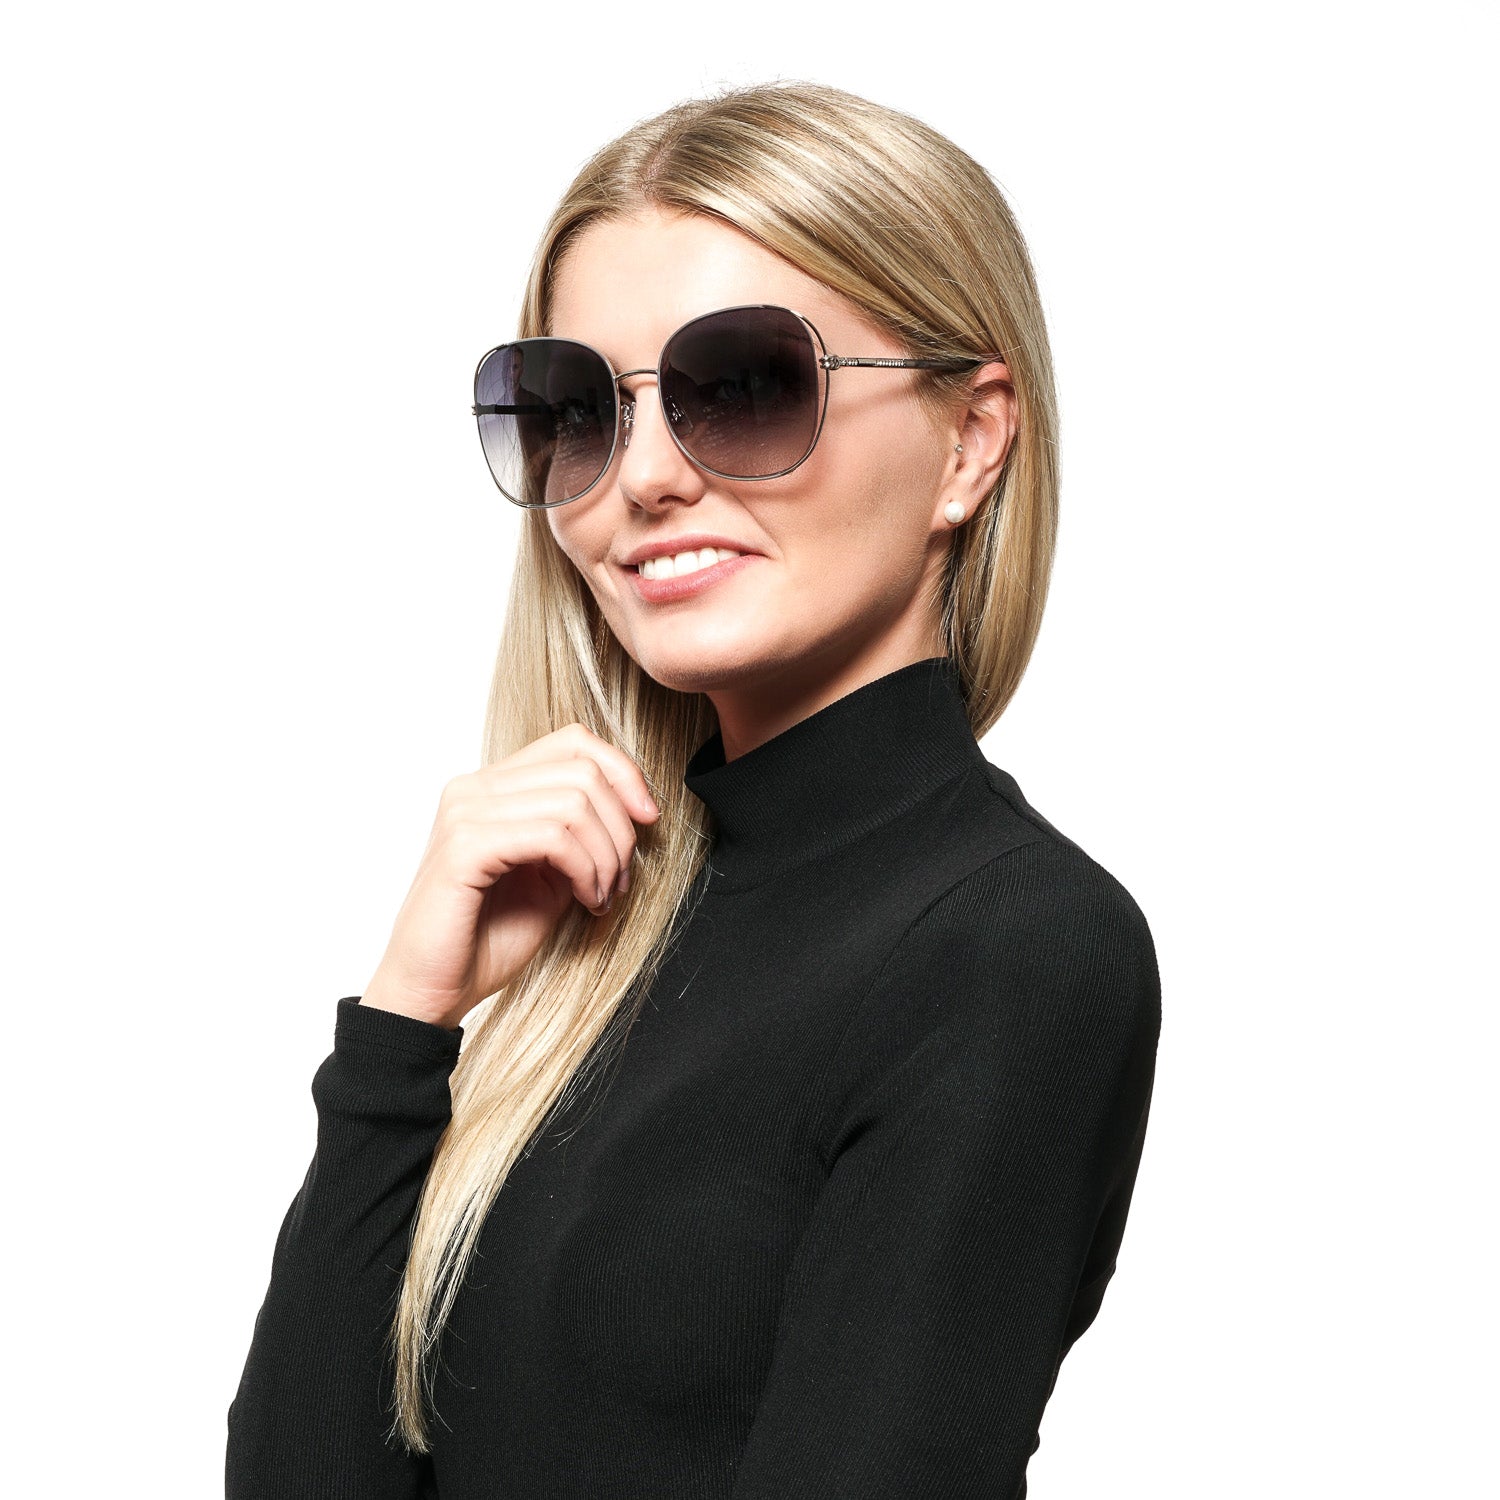 Swarovski Grey Sunglasses for Woman - Fizigo